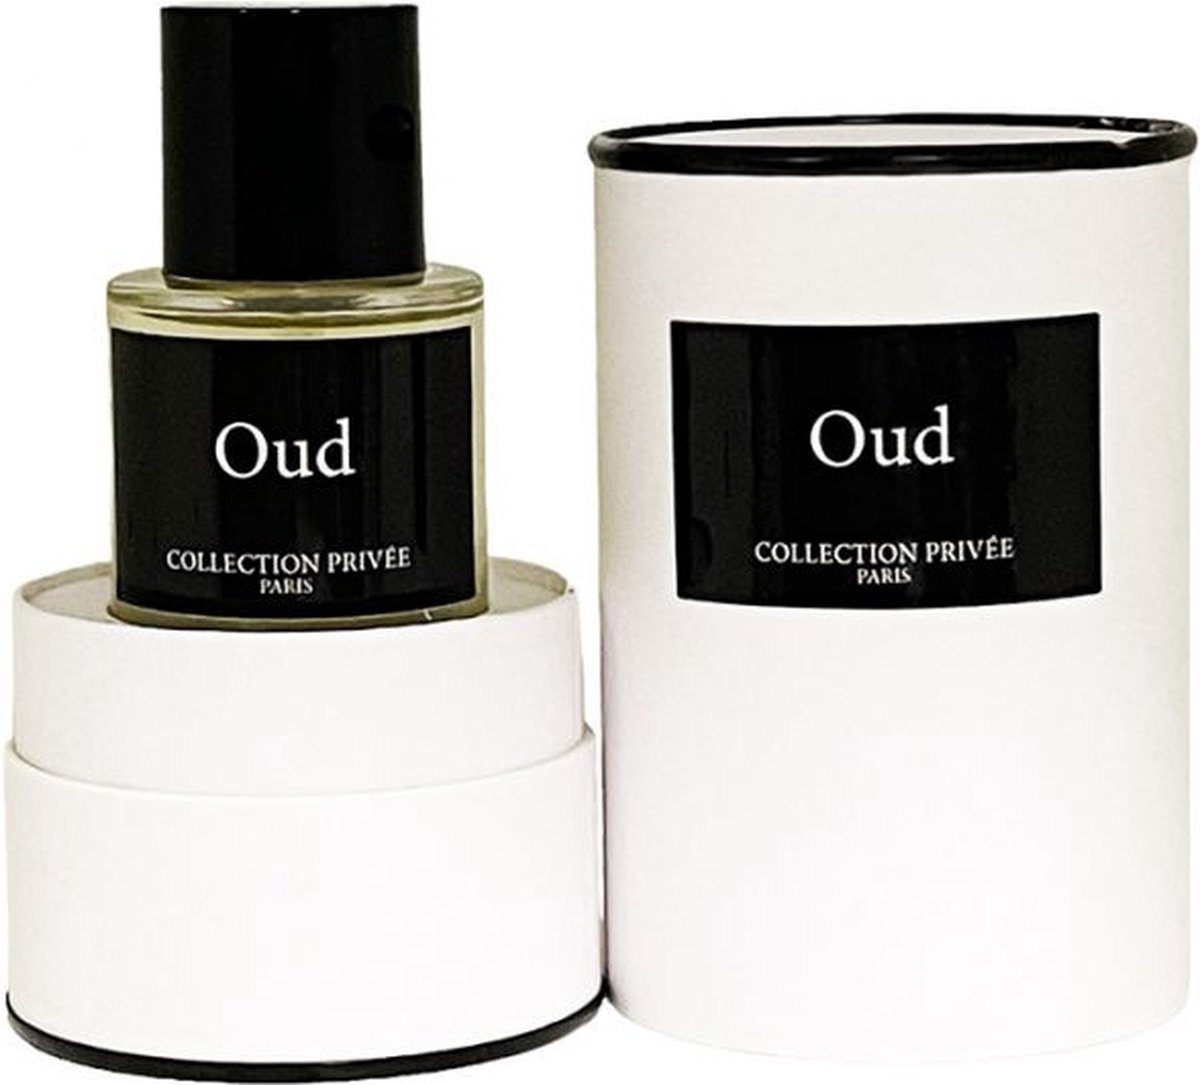 Collection privee paris - Oud Ispahan - 50ML Parfum - Unisex